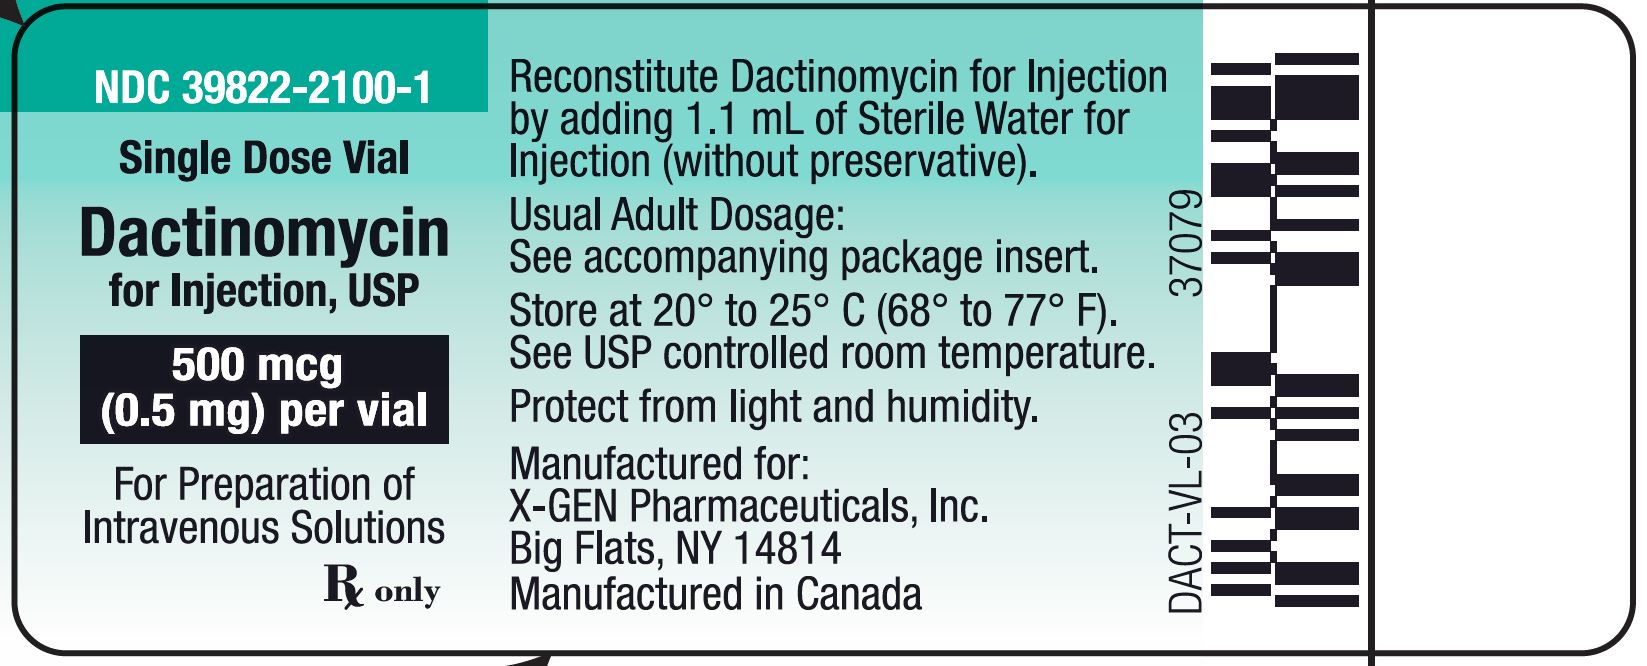 dactinomycin vial label